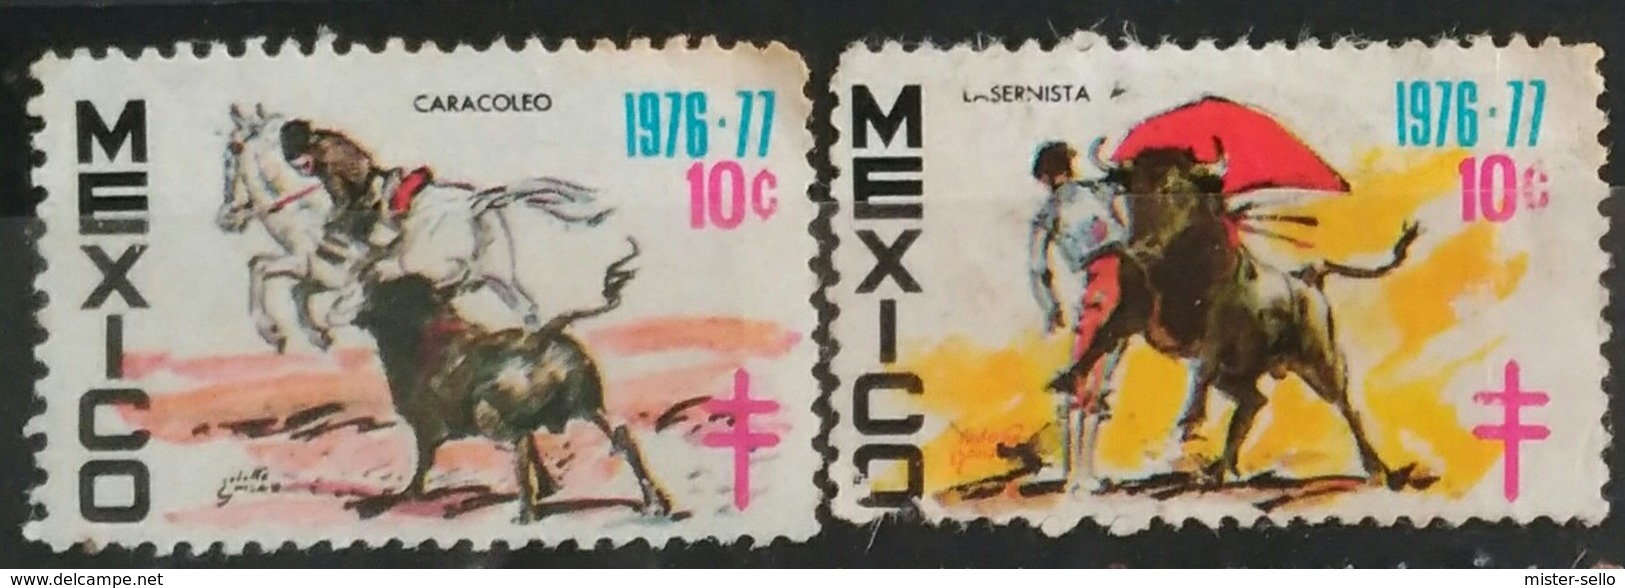 MÉXICO 1976-1977. Antituberculosis - Cruz De Lorena. USADO - USED - México